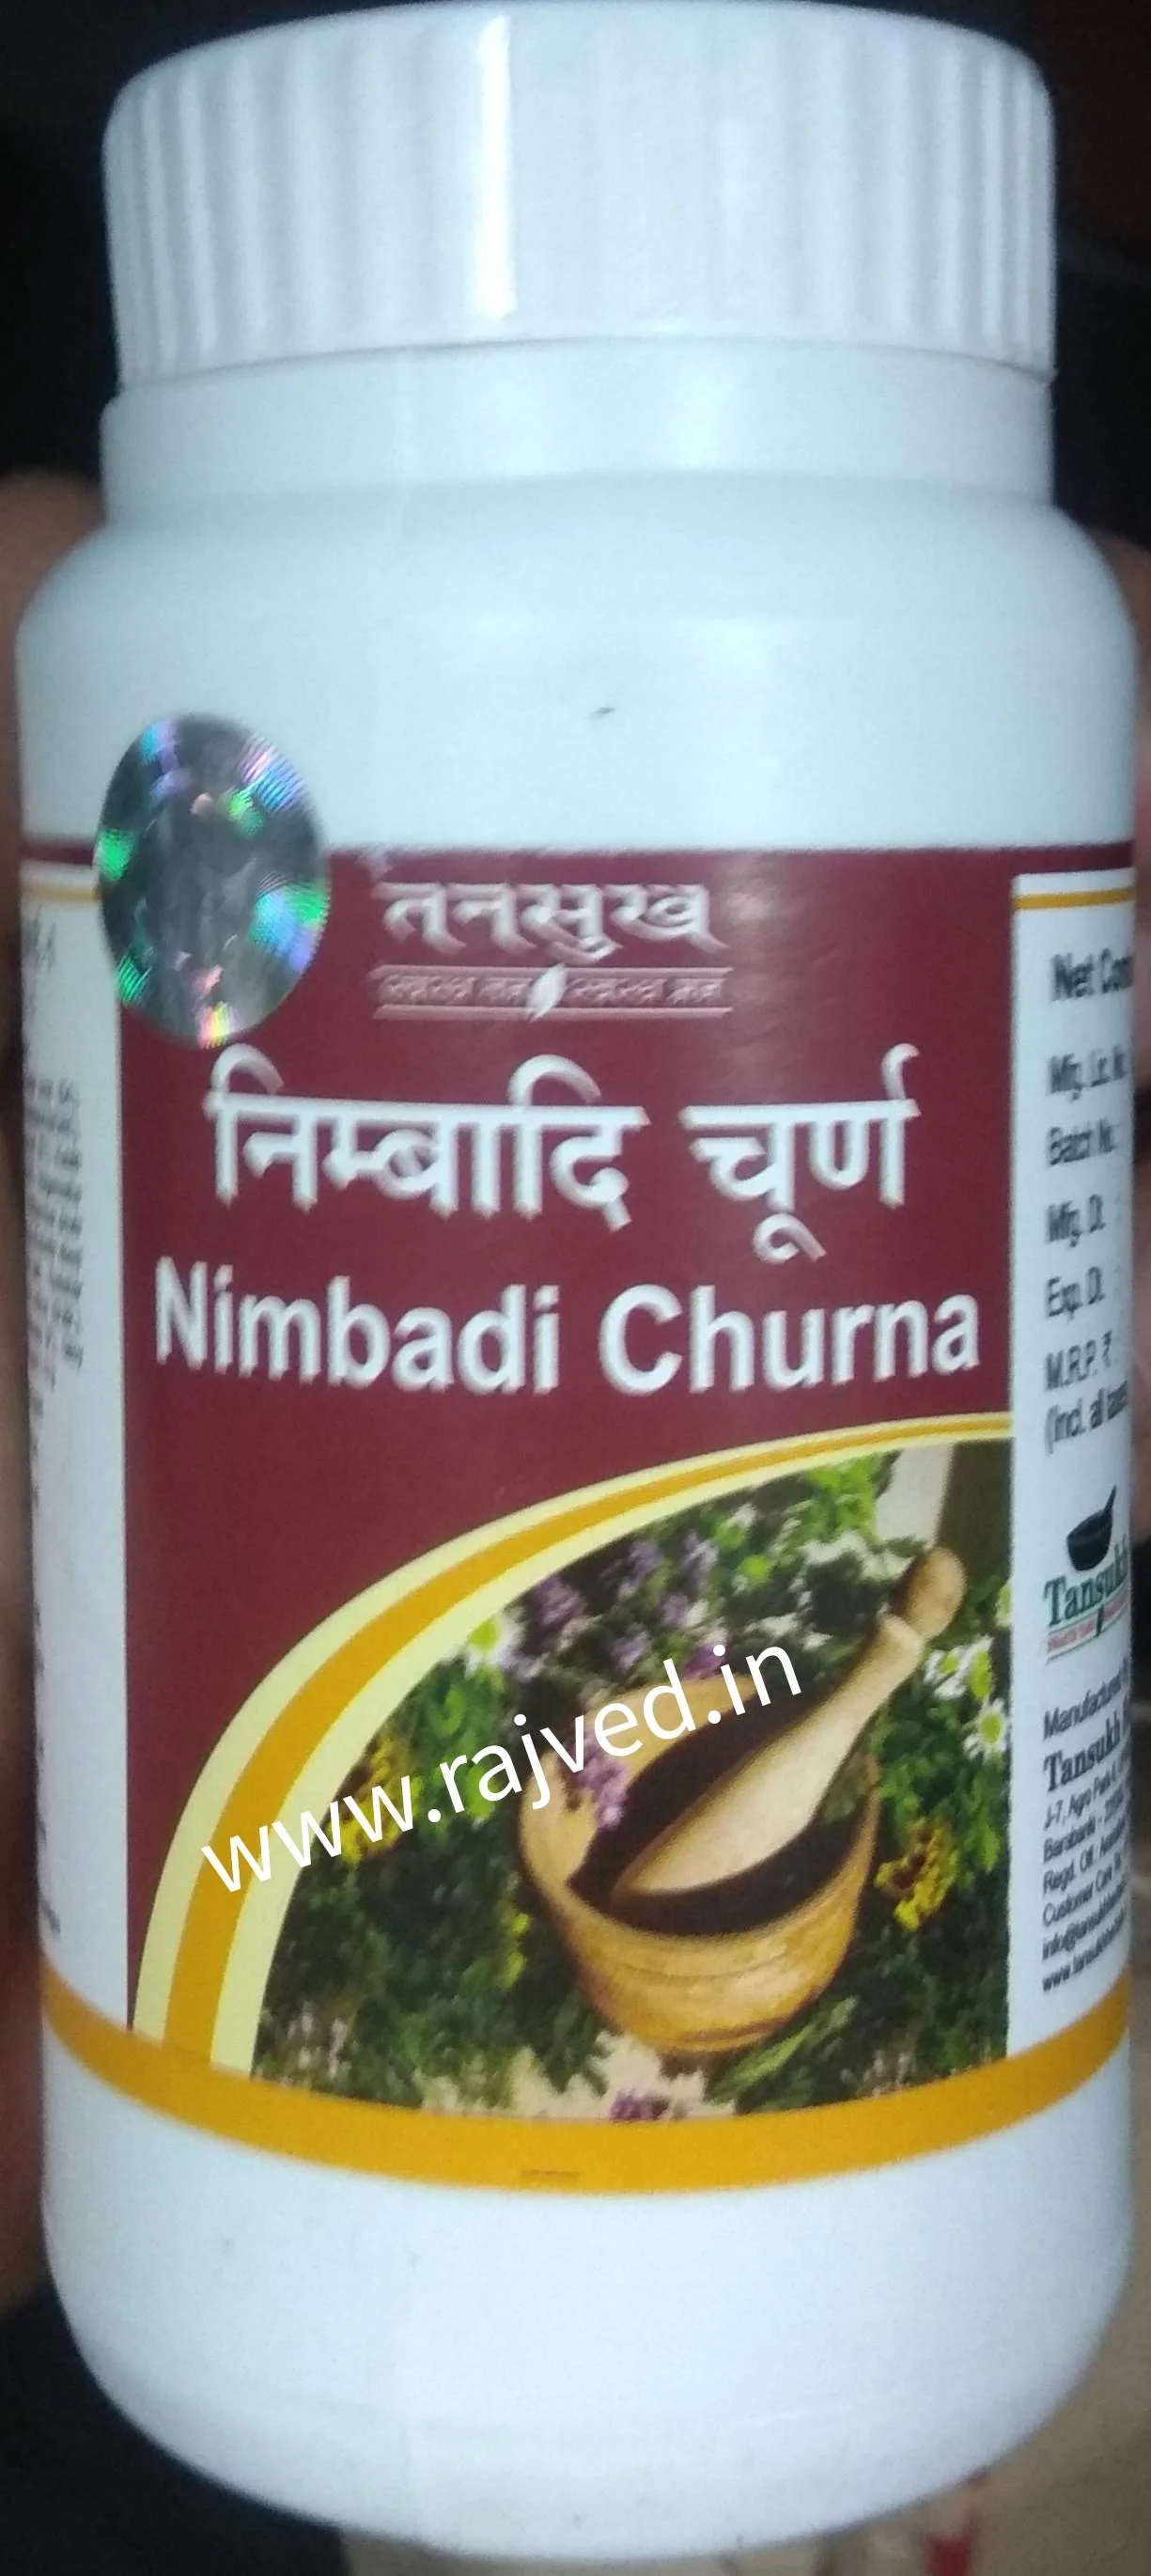 Nimbadi Churna 100 gm tansukh herbals